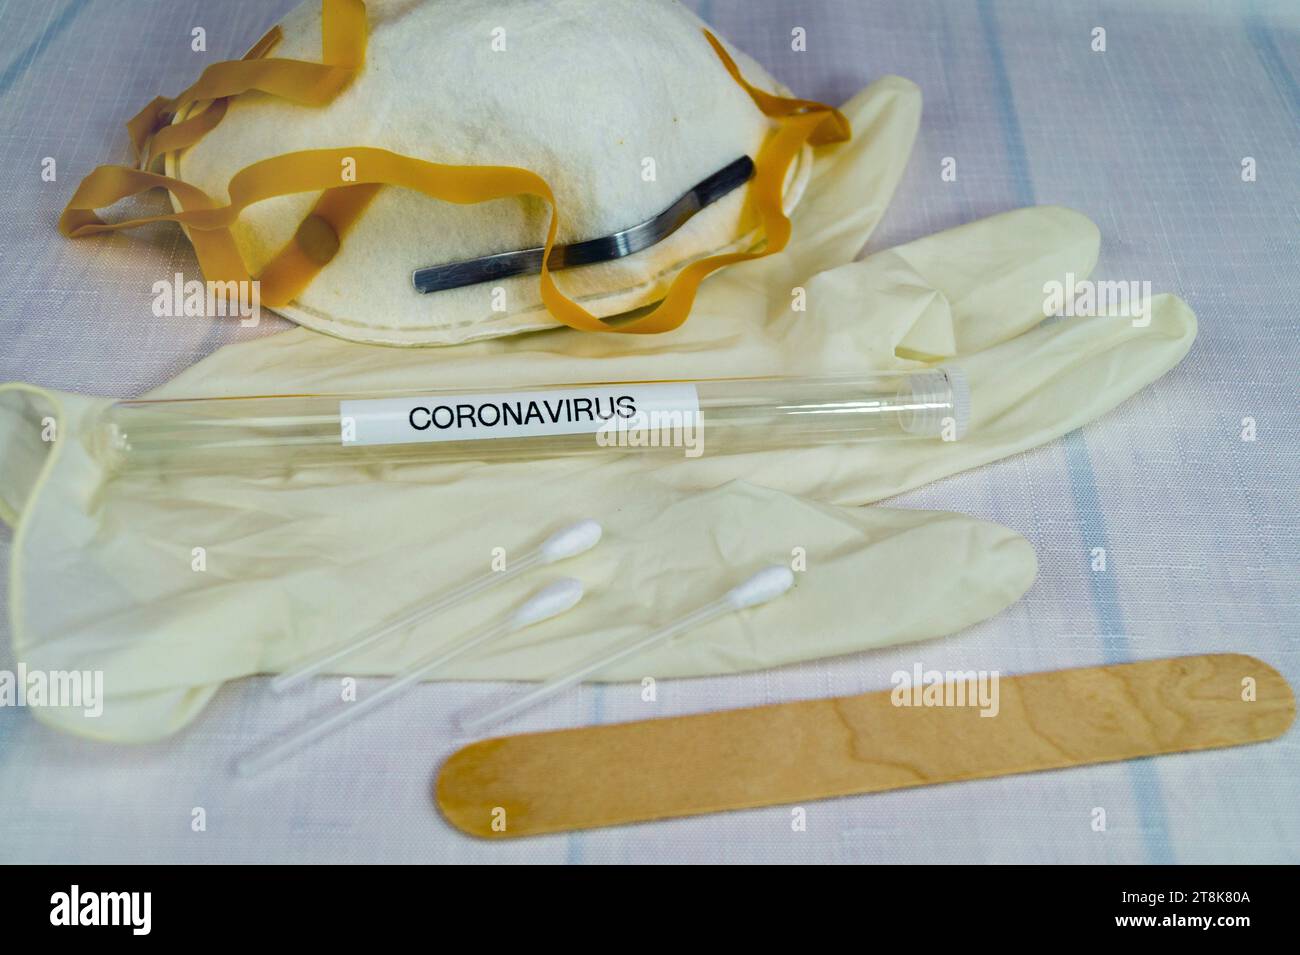 Corona test tubule, mask, latex glove, cotton swab and spatula Stock Photo